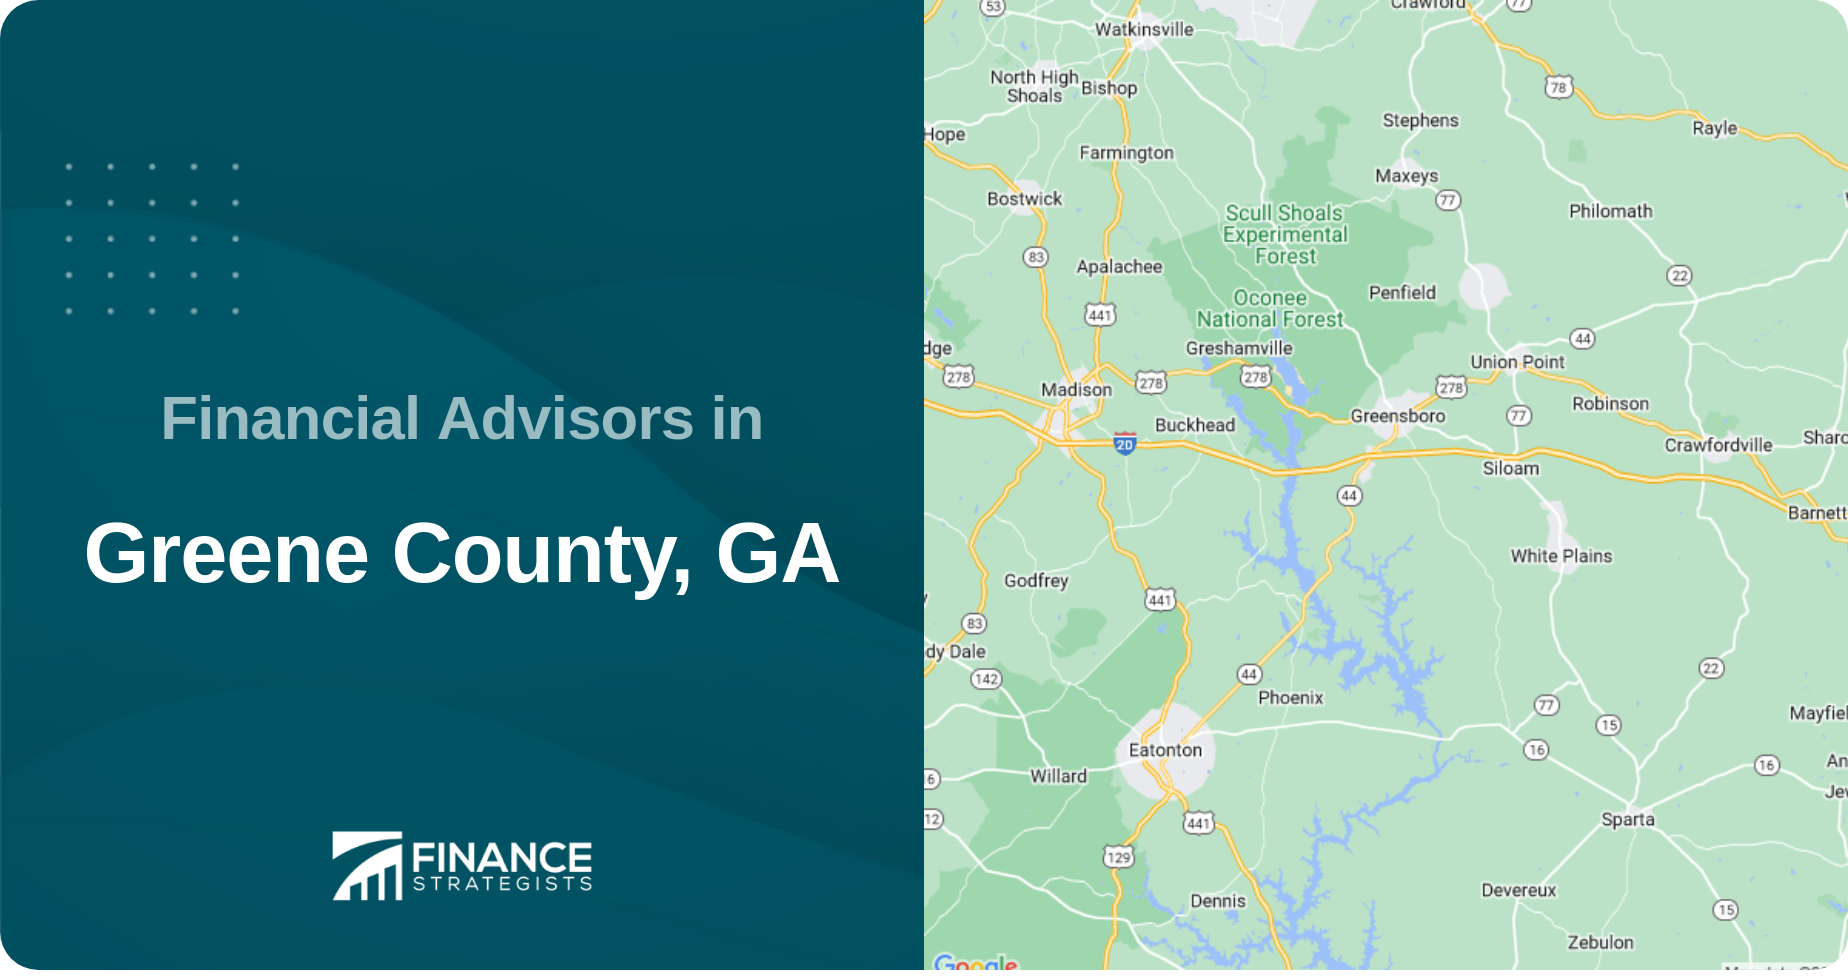 Financial Advisors in Greene County, GA